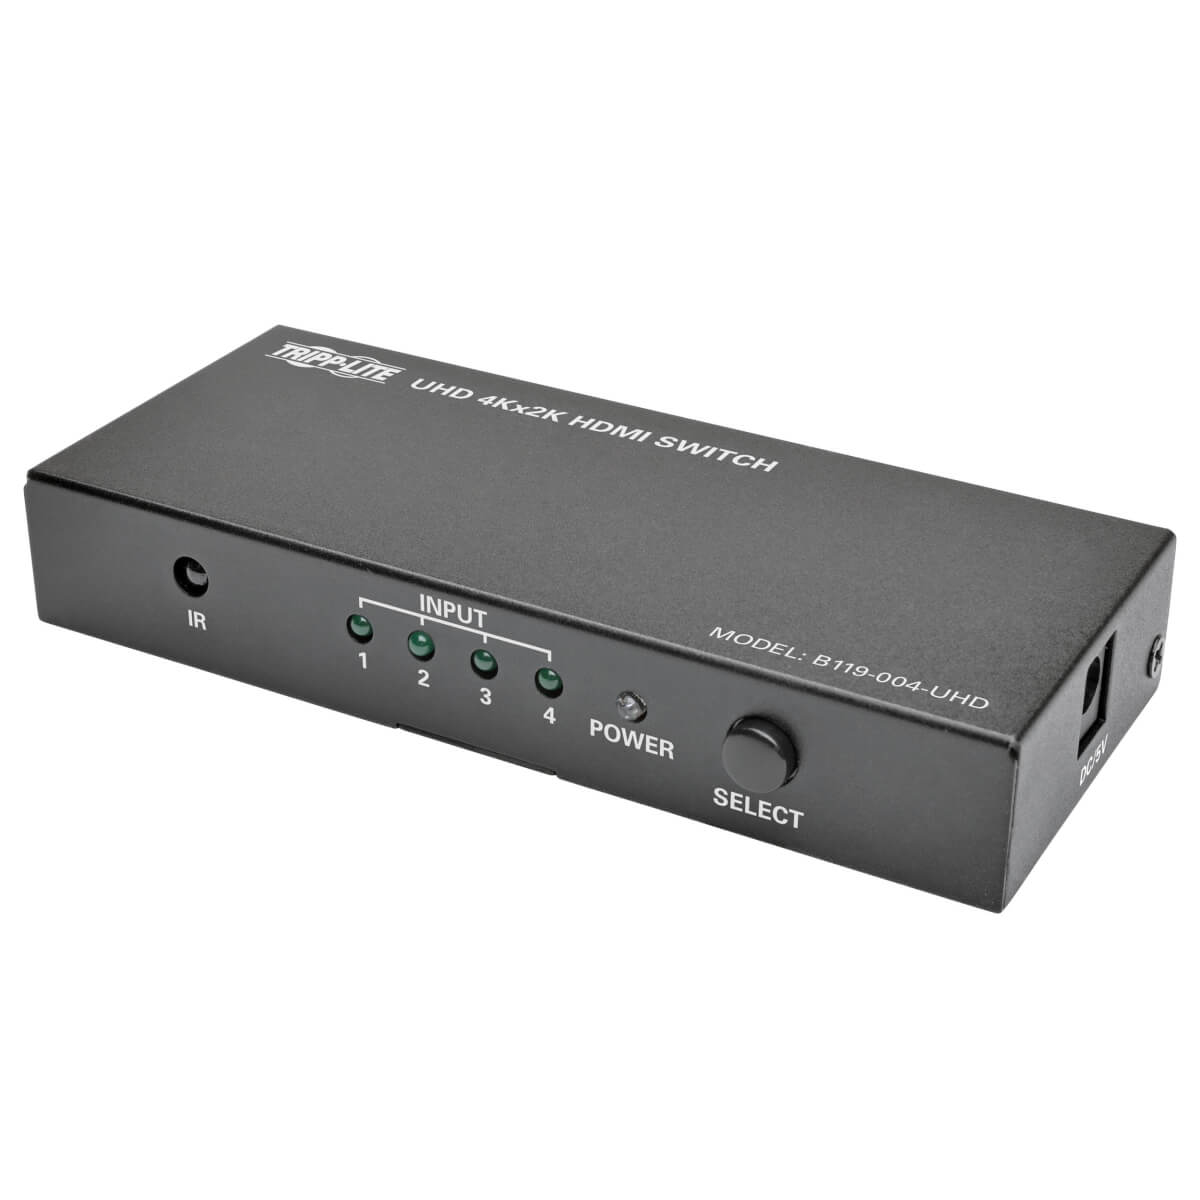 Tripp Lite B119-004-UHD Switch HDMI de 4 Puertos con Control Remoto - 4K 60 Hz, UHD, 4:4:4, HDR, 3D